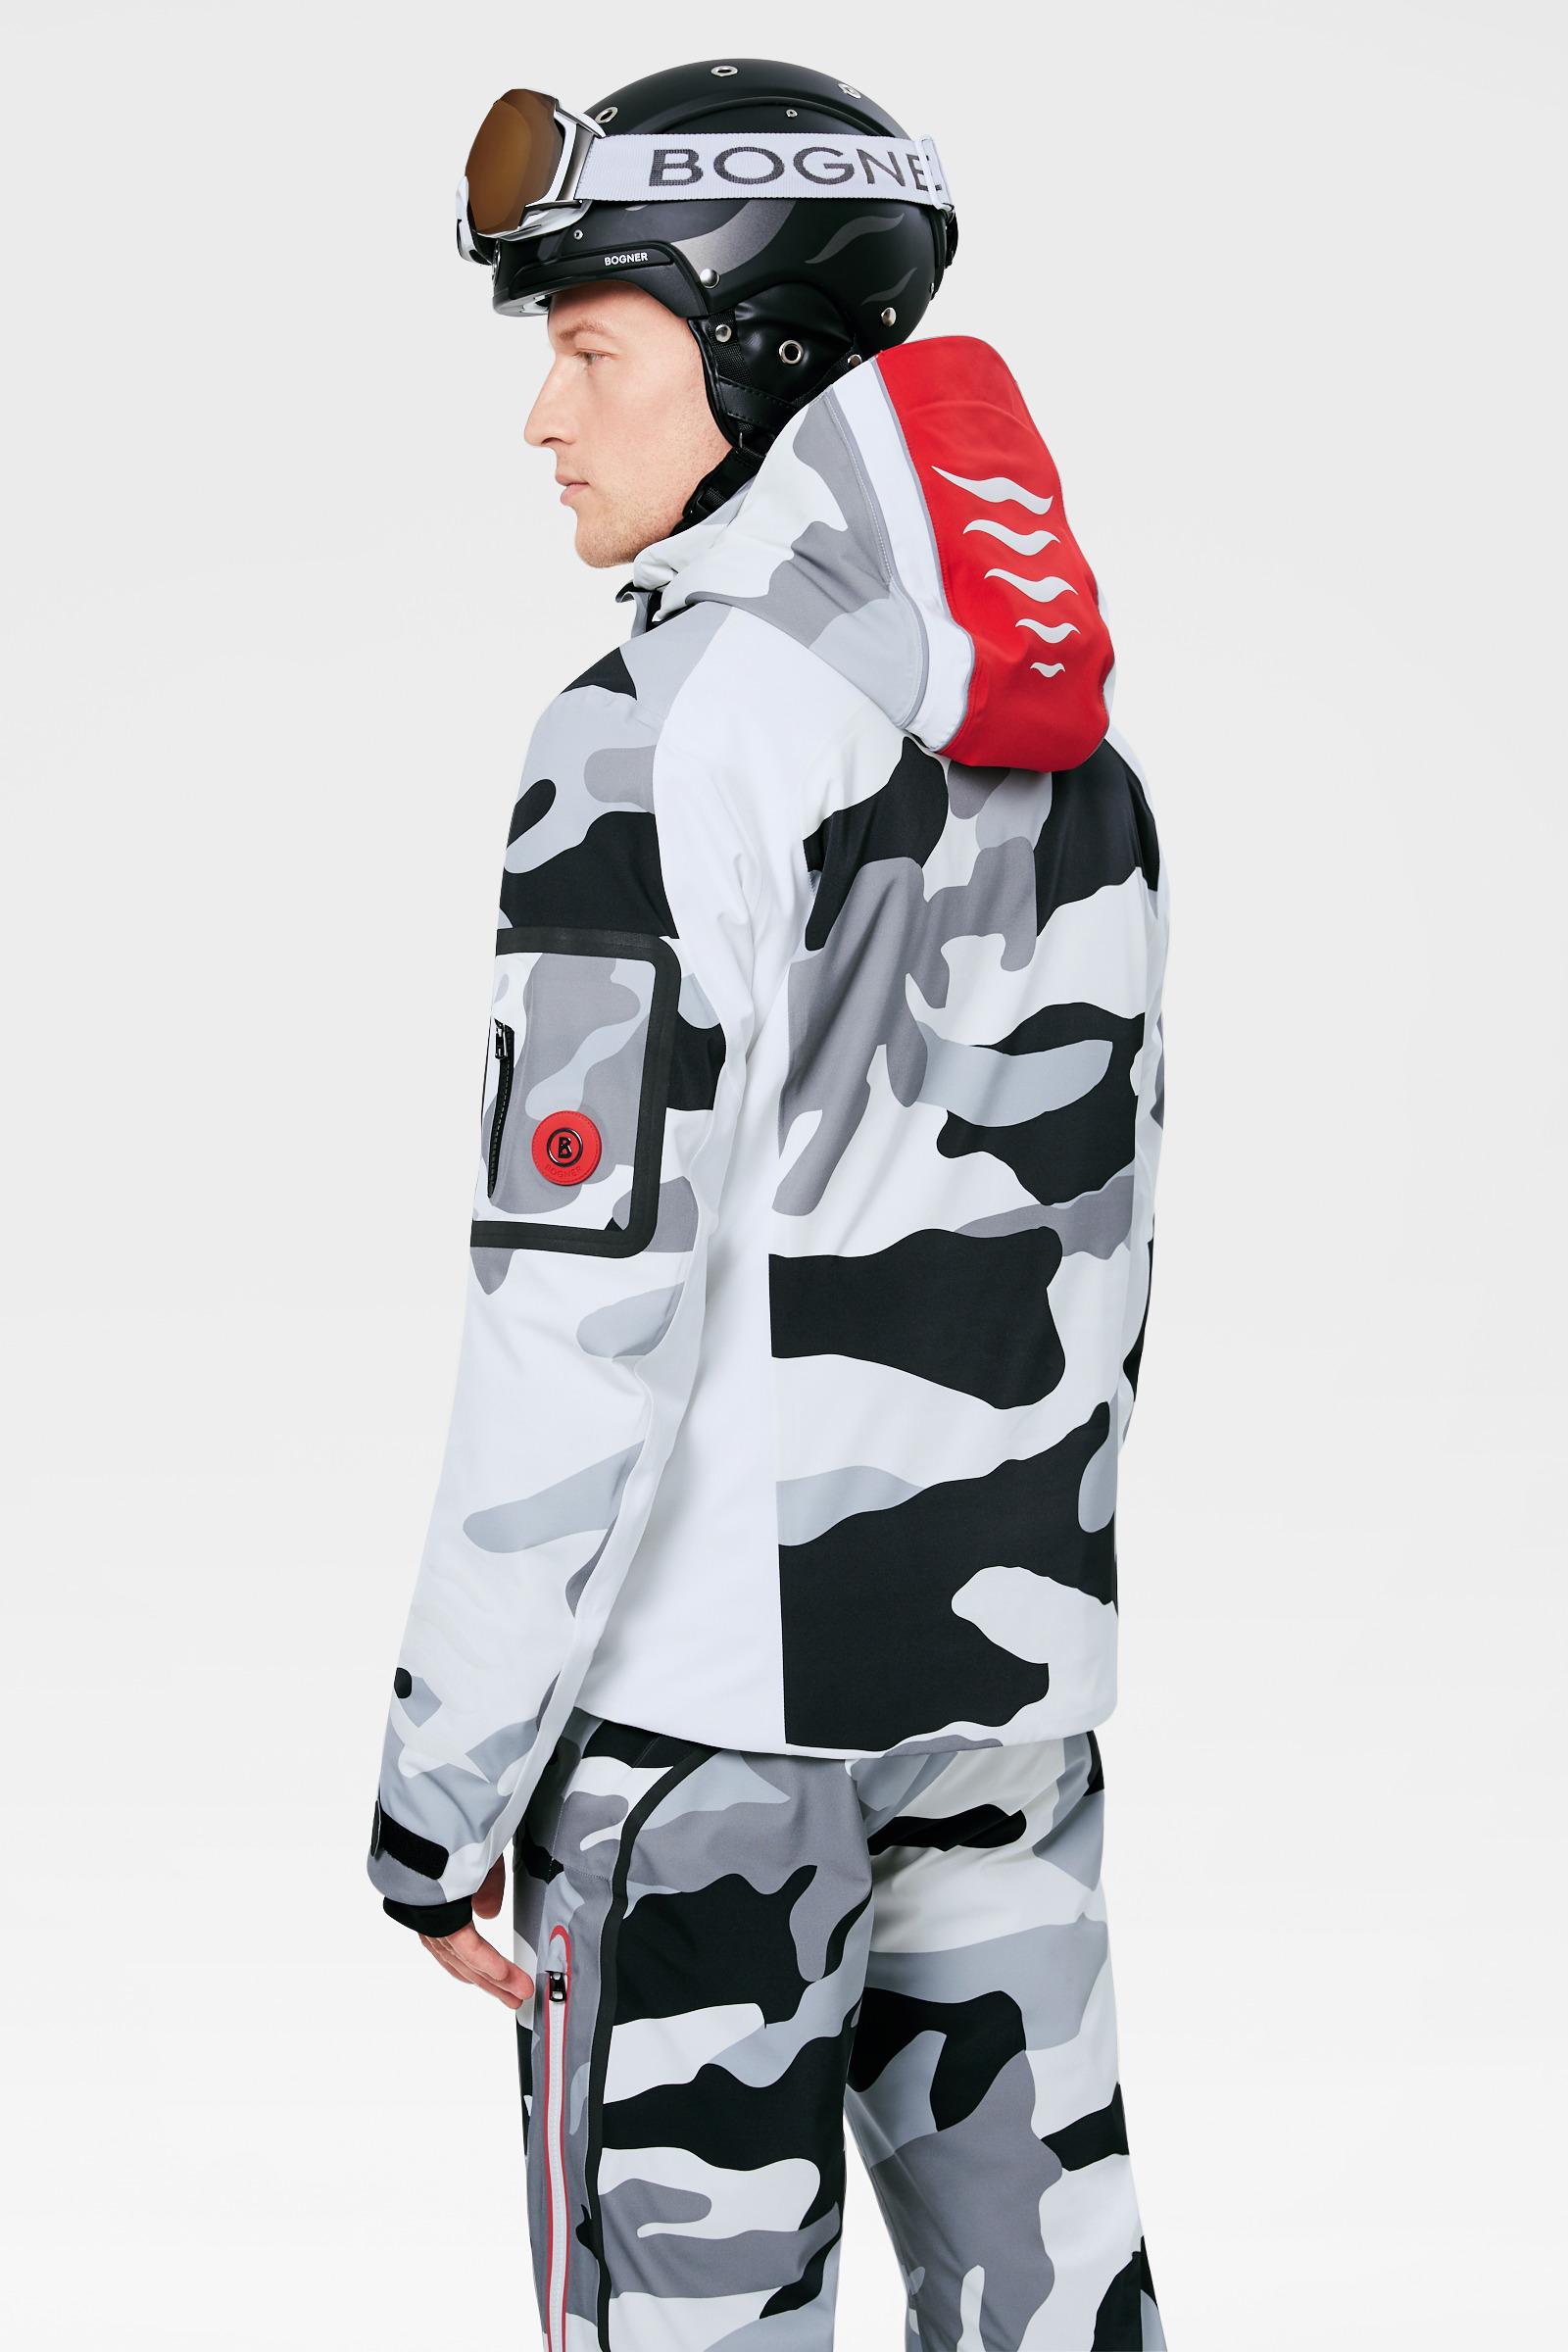 Bogner Jerry Ski Jacket In Off-white/black/grey for Men | Lyst Australia